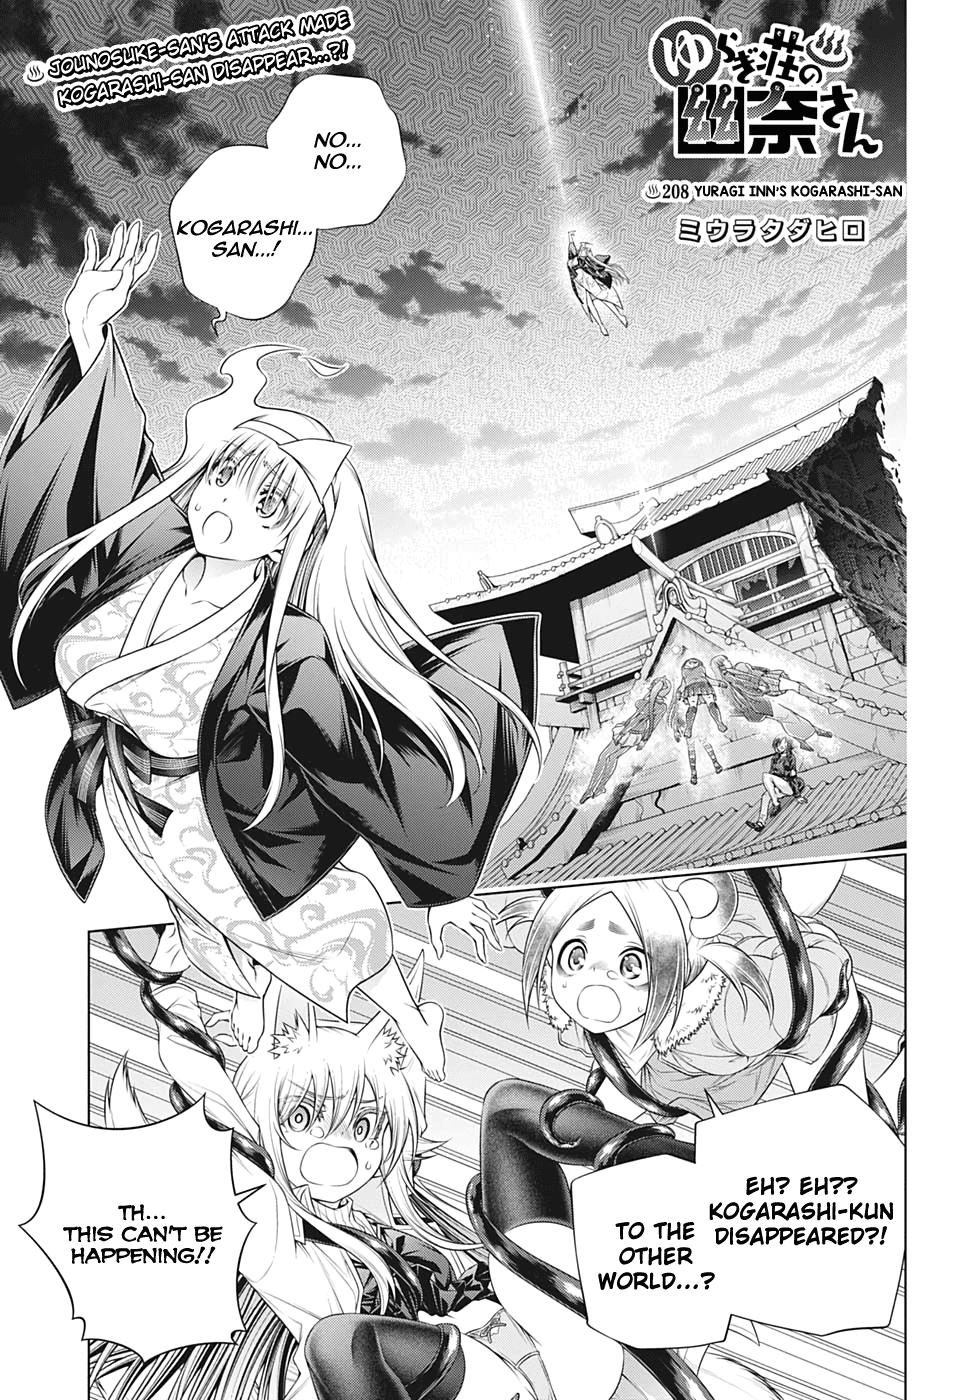 Yuuna and the Haunted Hot Springs Vol. 24 by Miura, Tadahiro